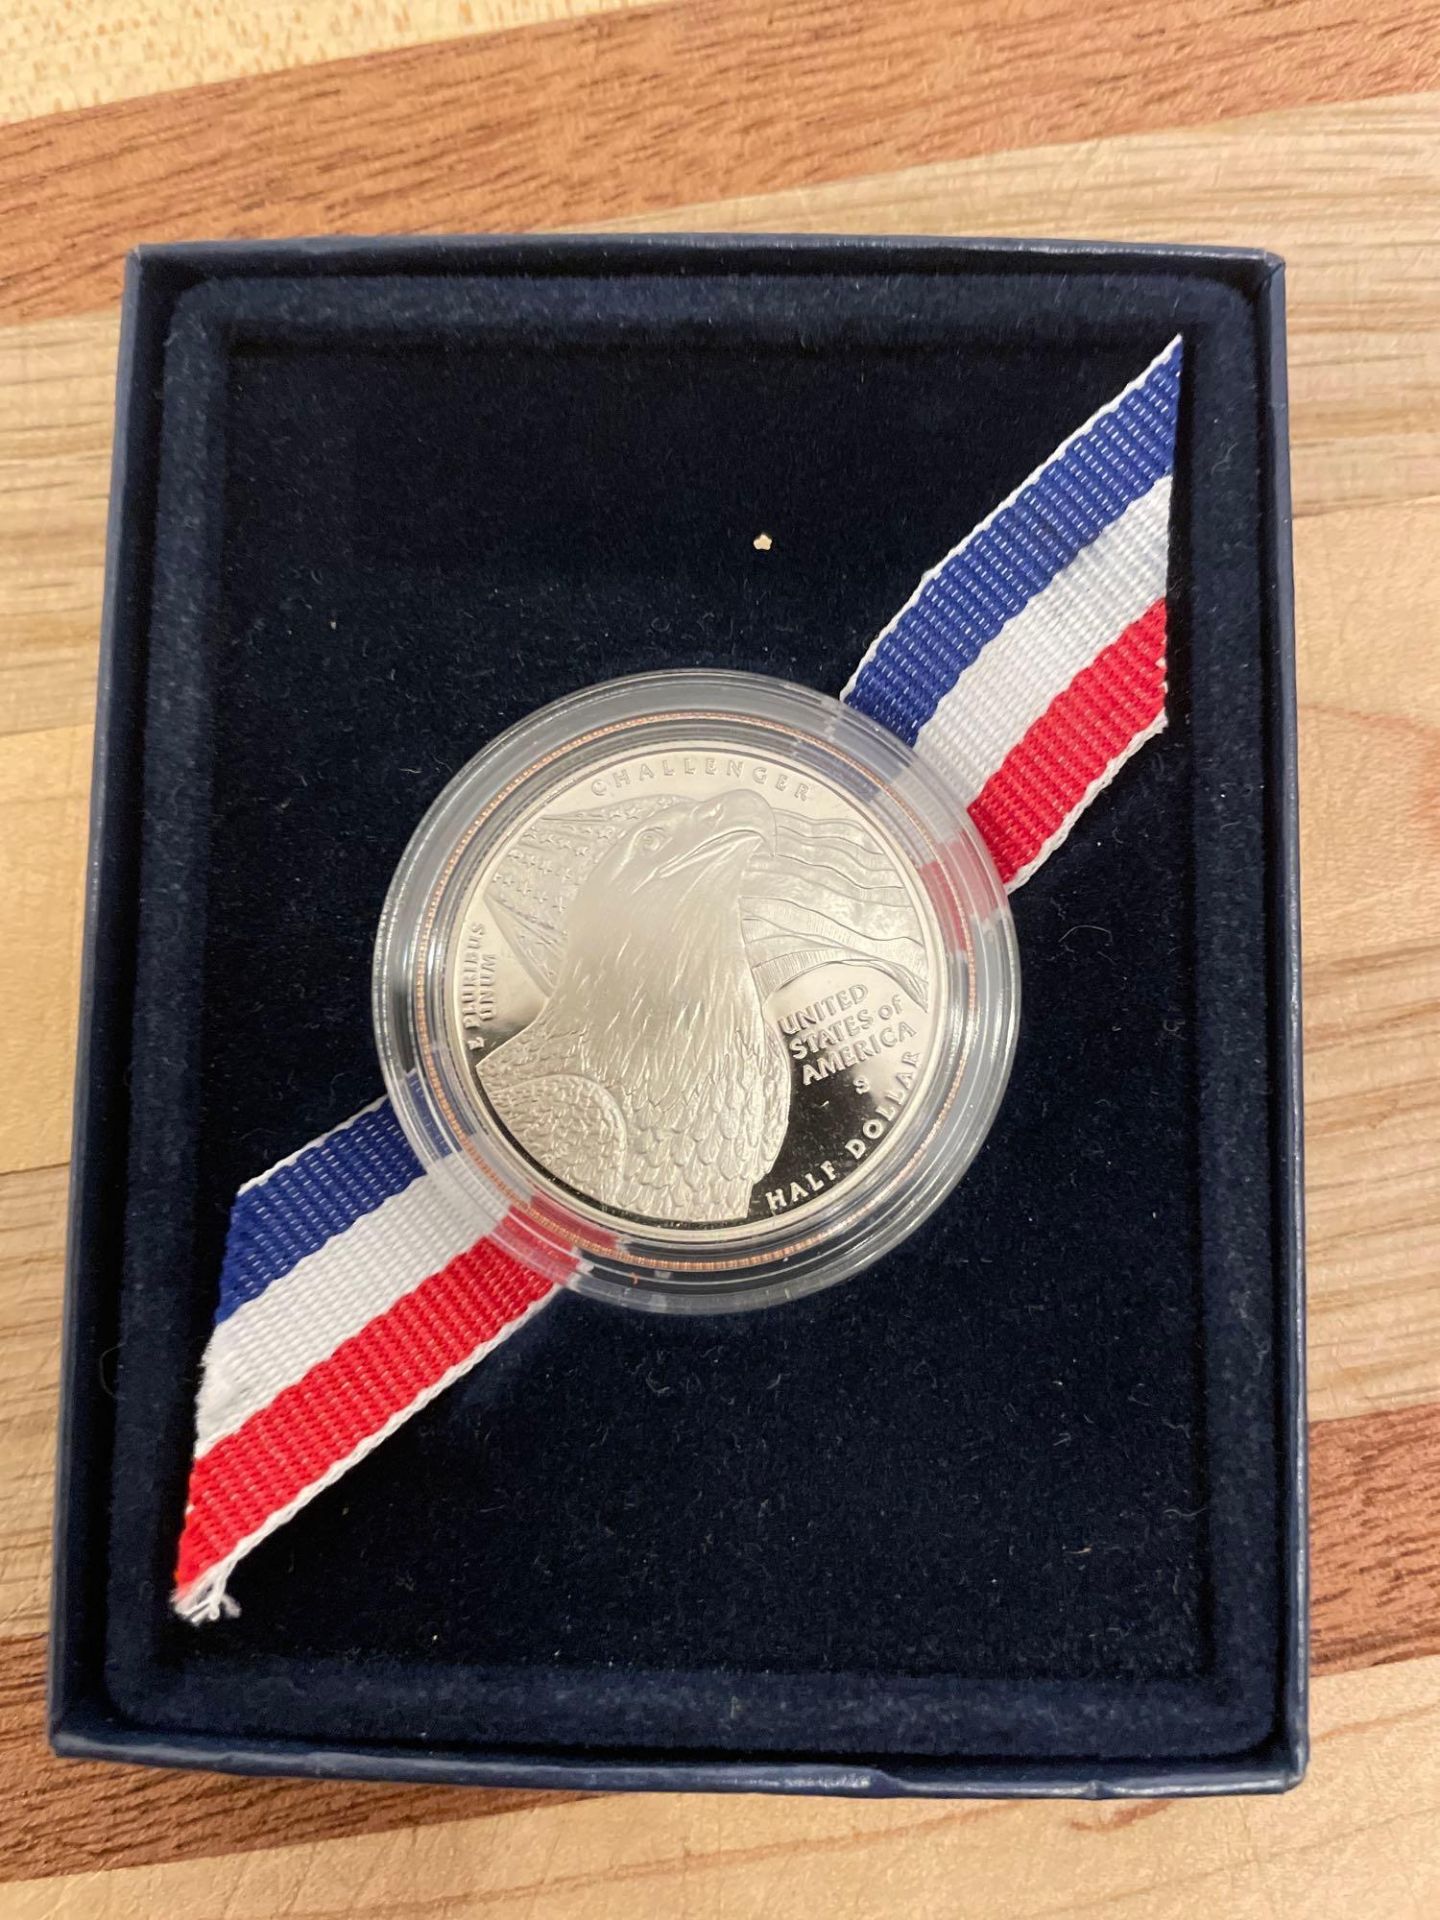 2008 bald eagle proof half dollar commemorative coin - Image 2 of 5